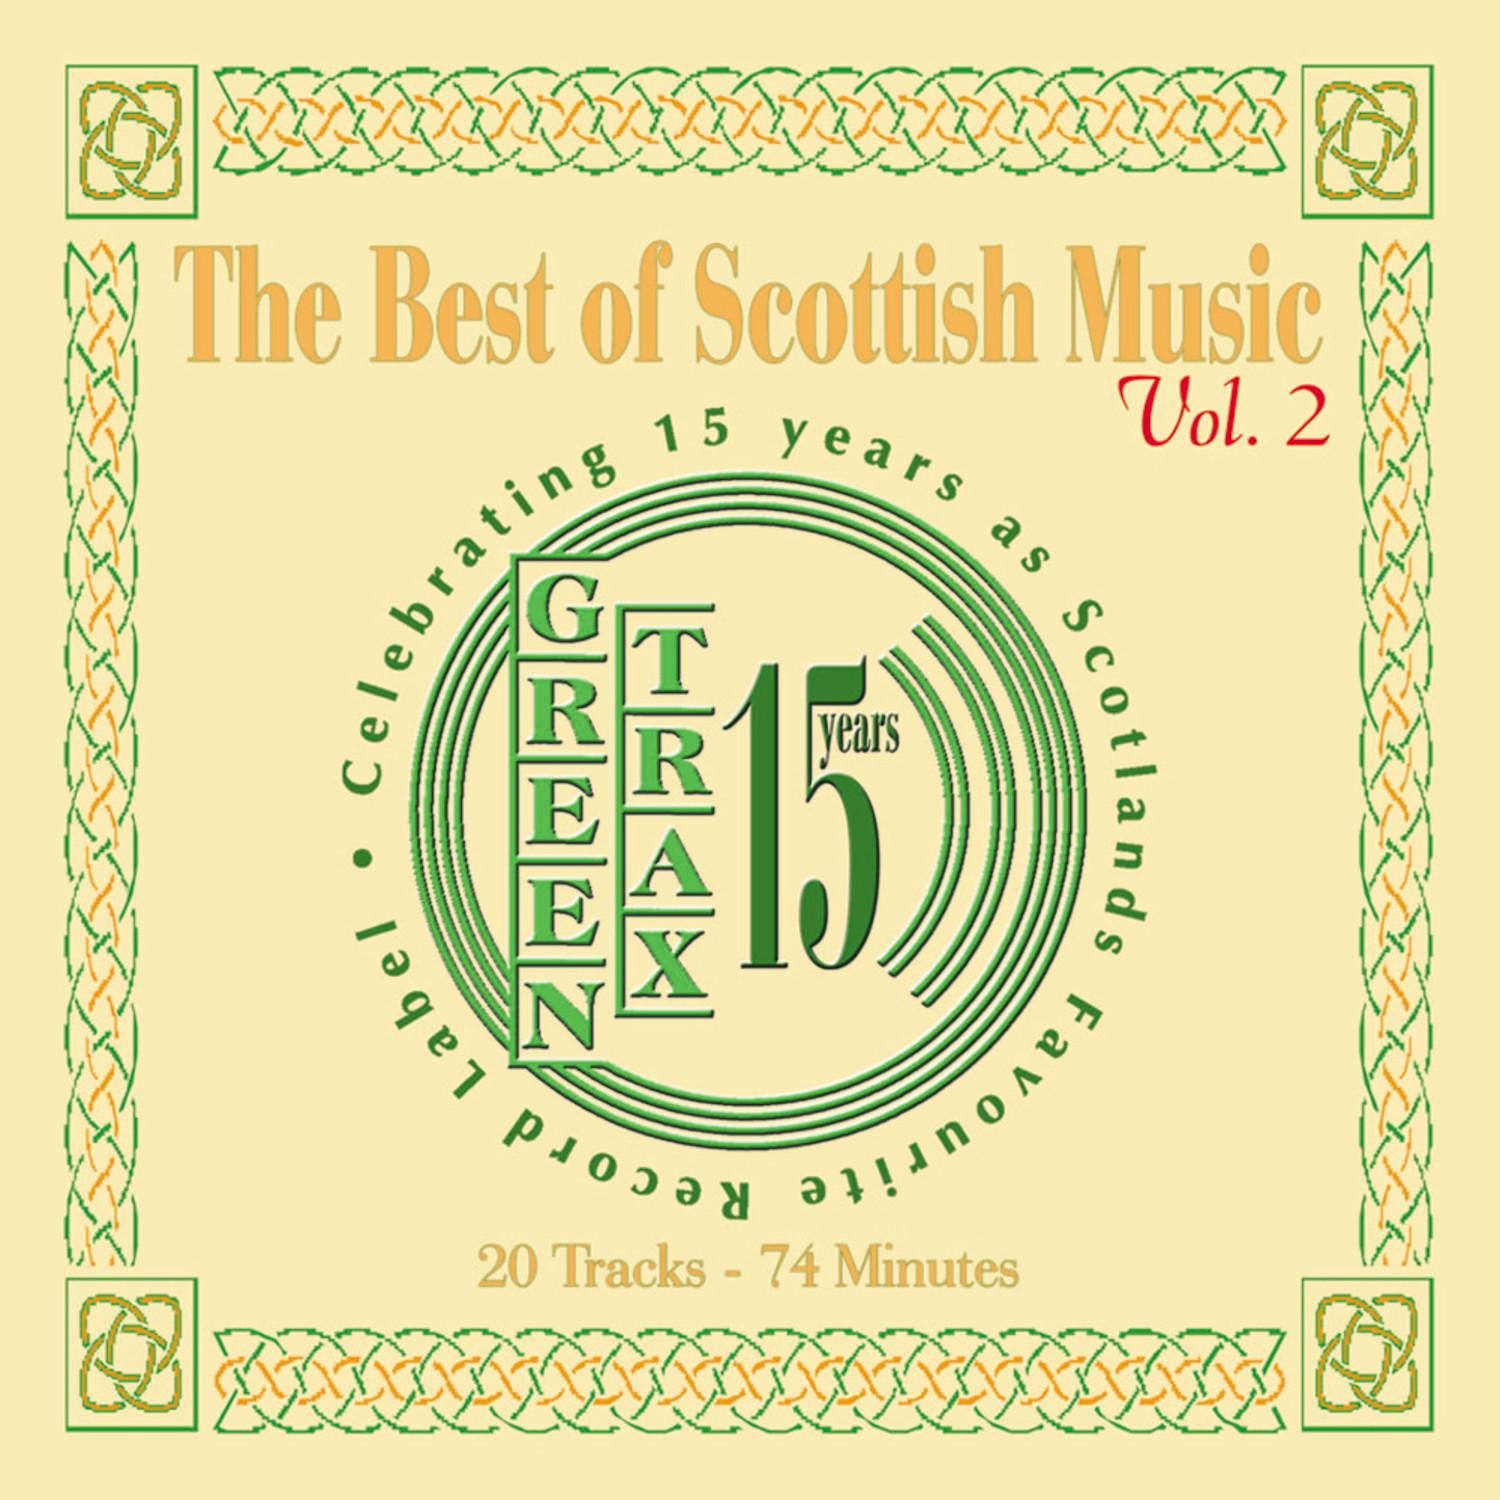 The Best of Scottish Music Vol. 2